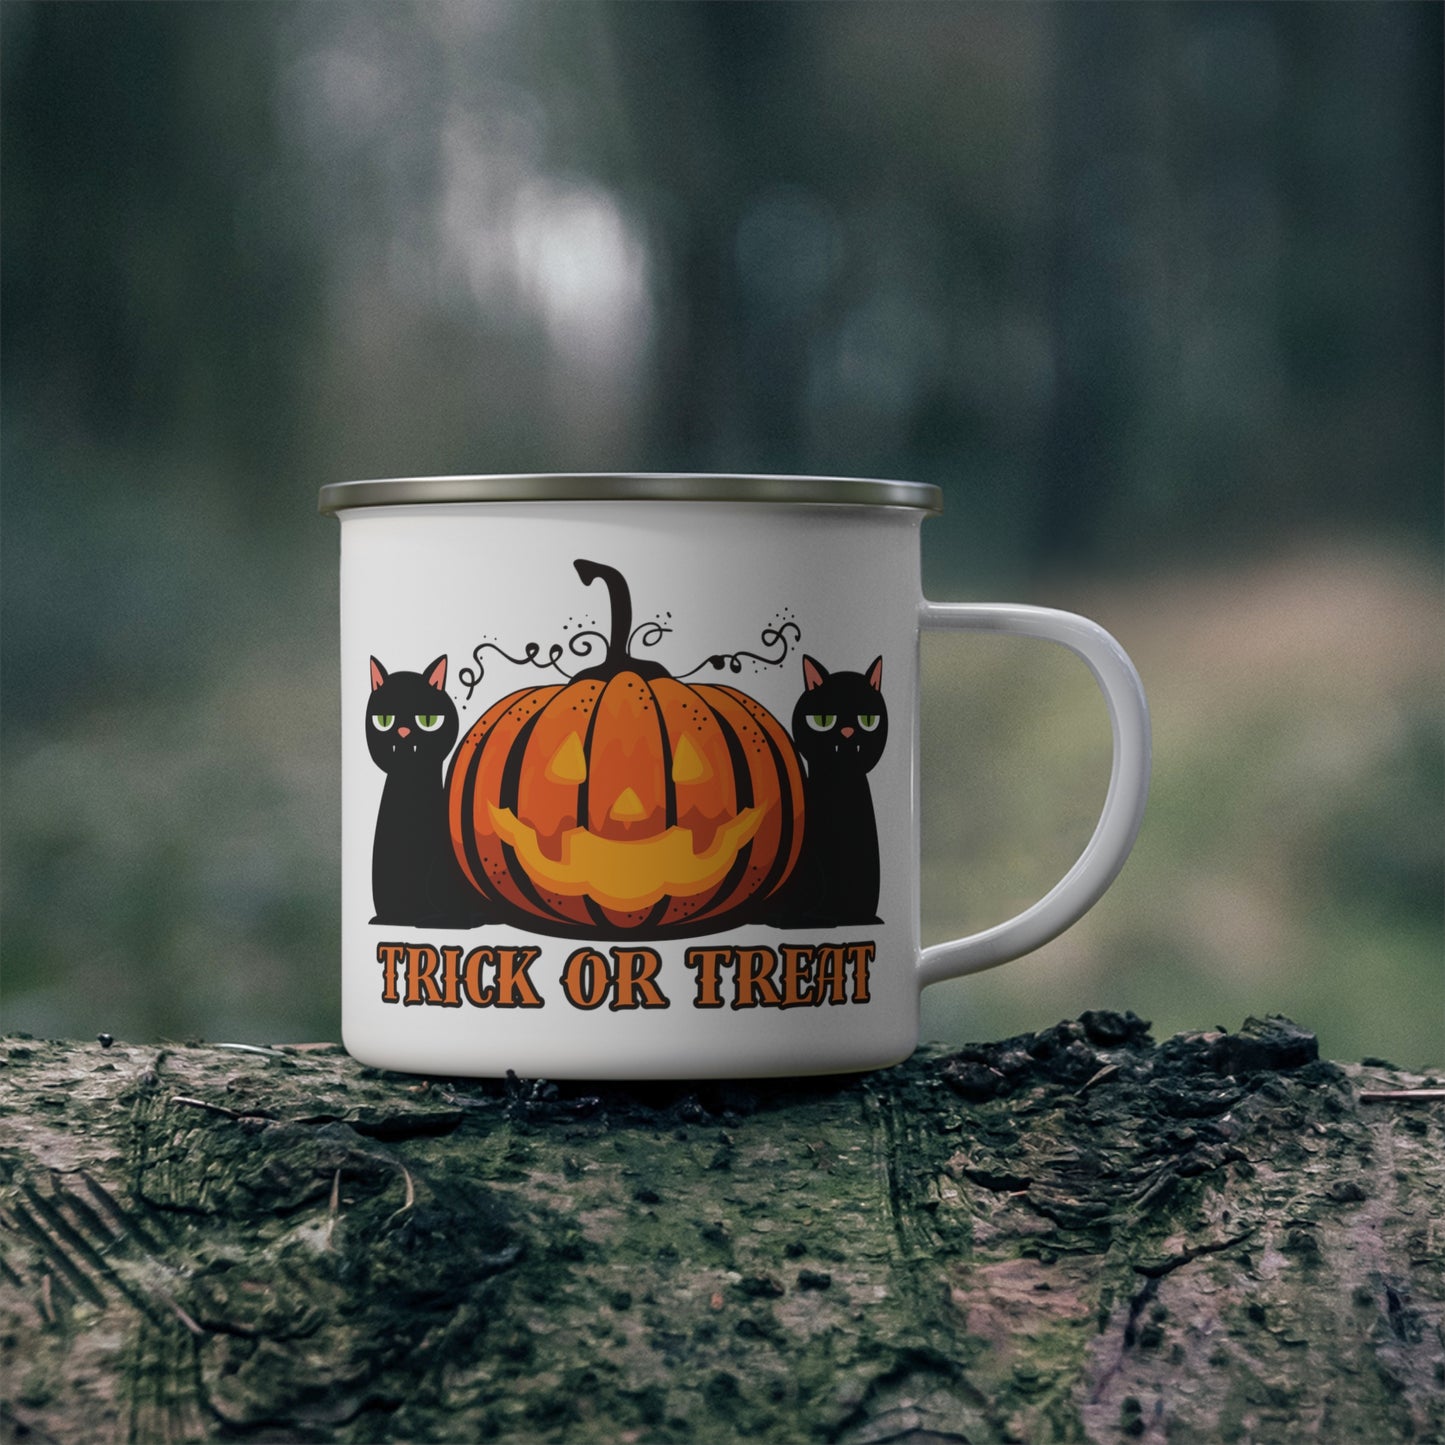 Black Cats Trick or Treat Halloween Enamel Camping Mug